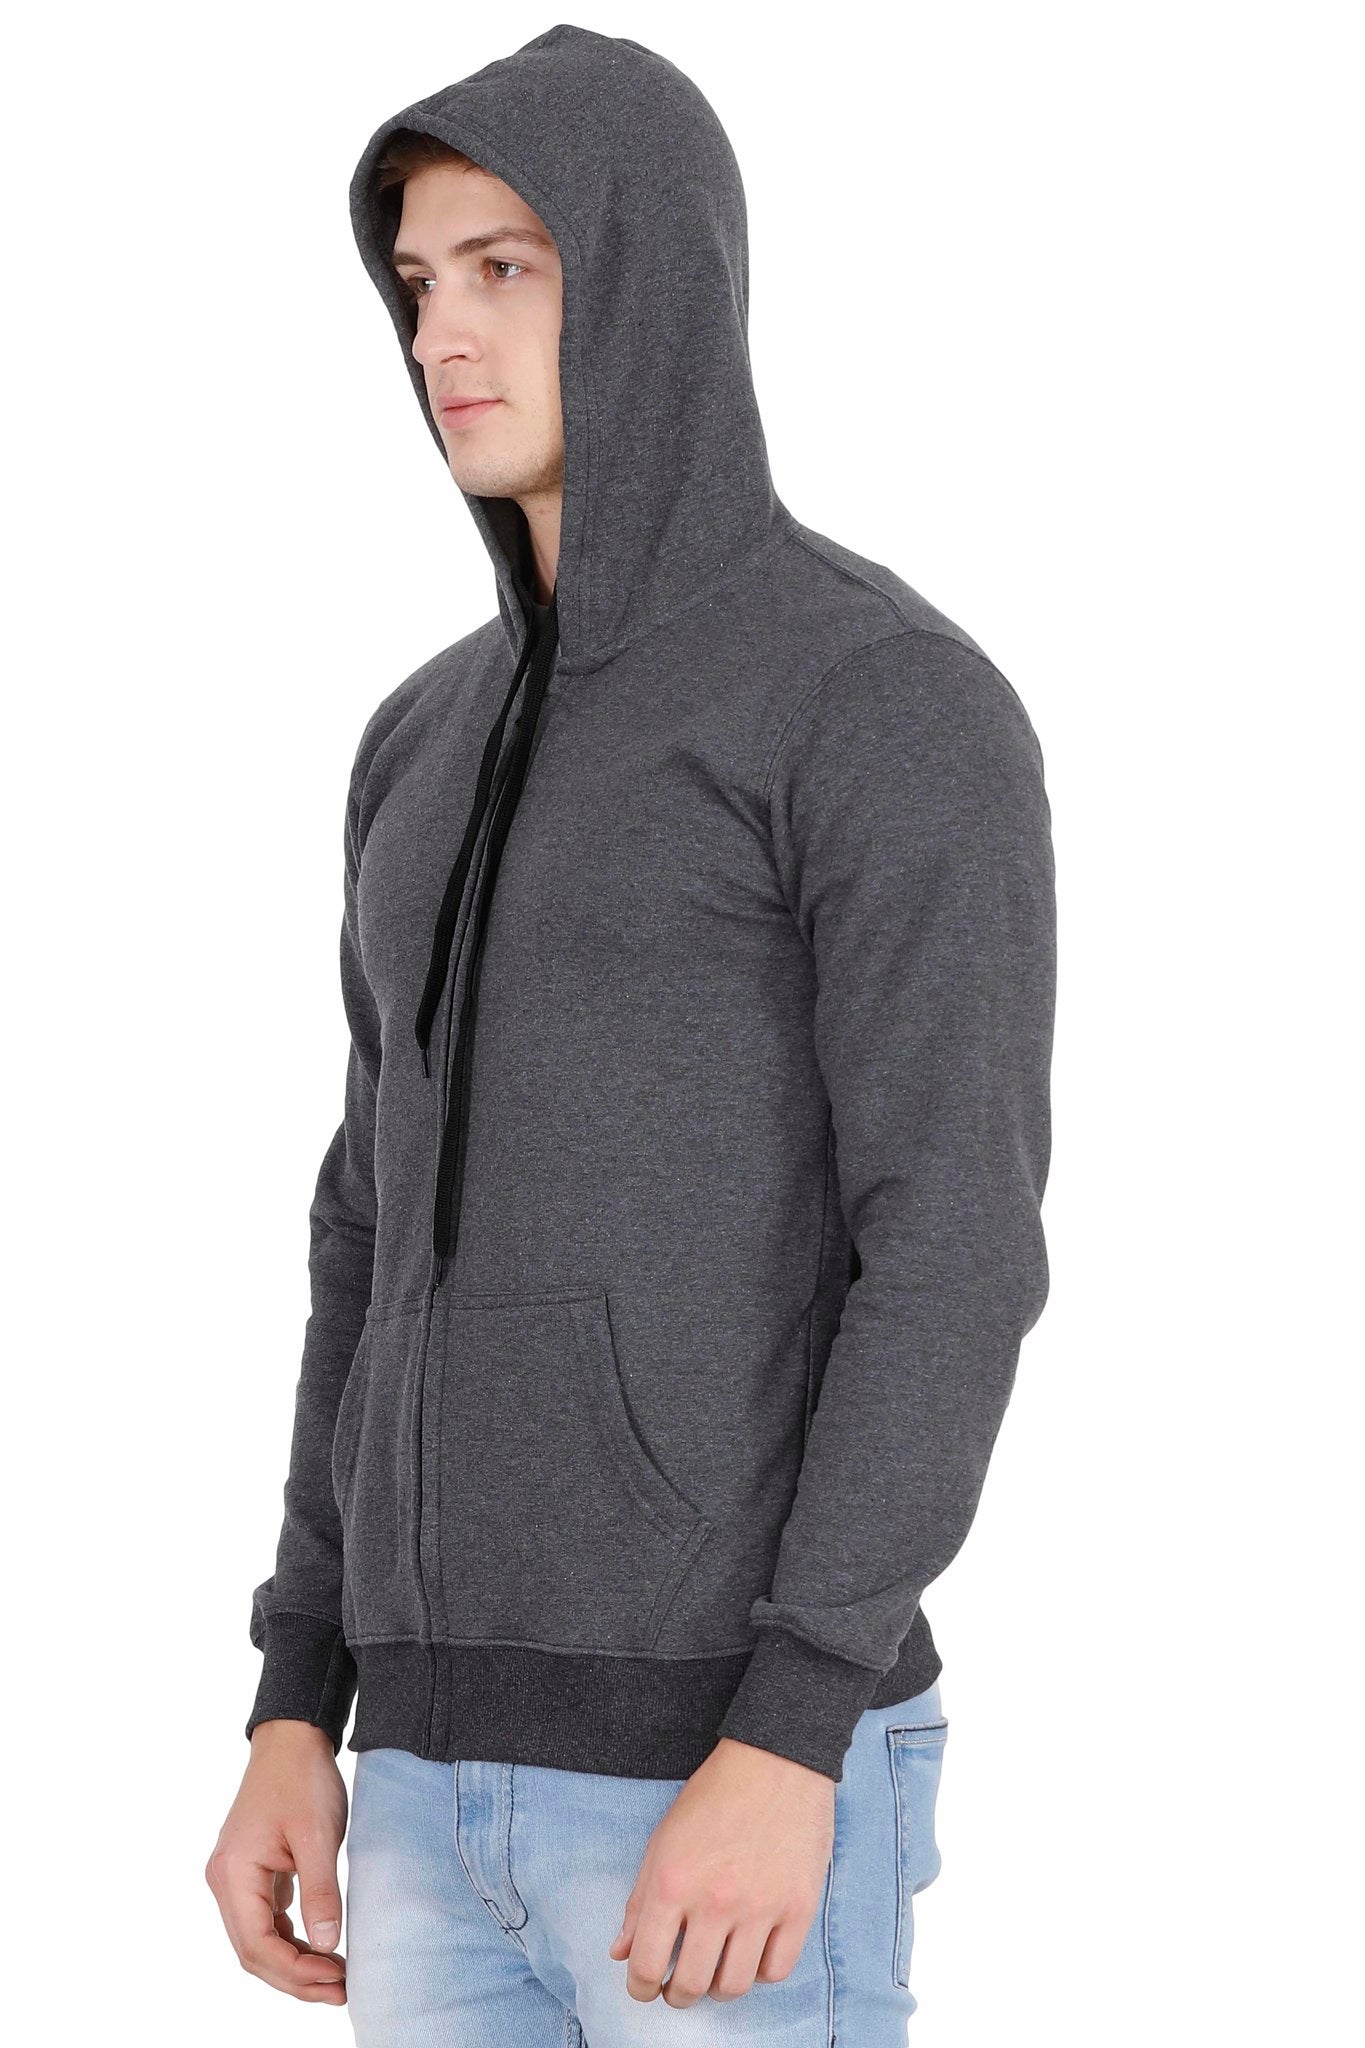 Men's Cotton Plain Full Sleeve Charcoal Melange Color Sweatshirt/Hoodies